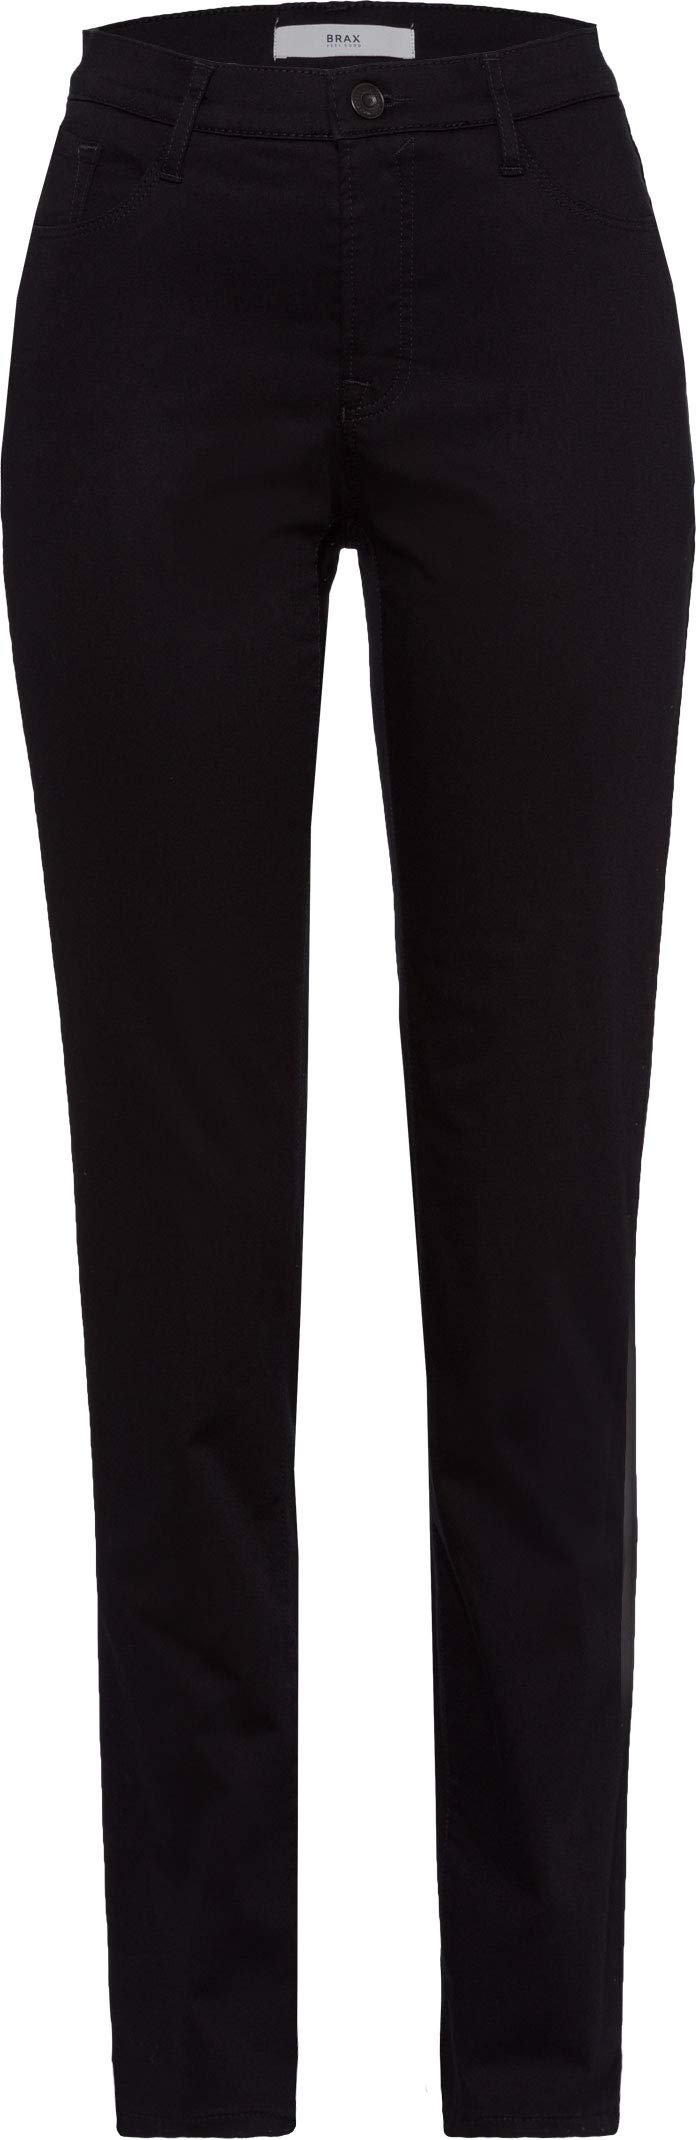 BRAX Damen StyleMary City Sport Premium Five-Pocket Straight Fit Hose, Schwarz (Perma Black), 36